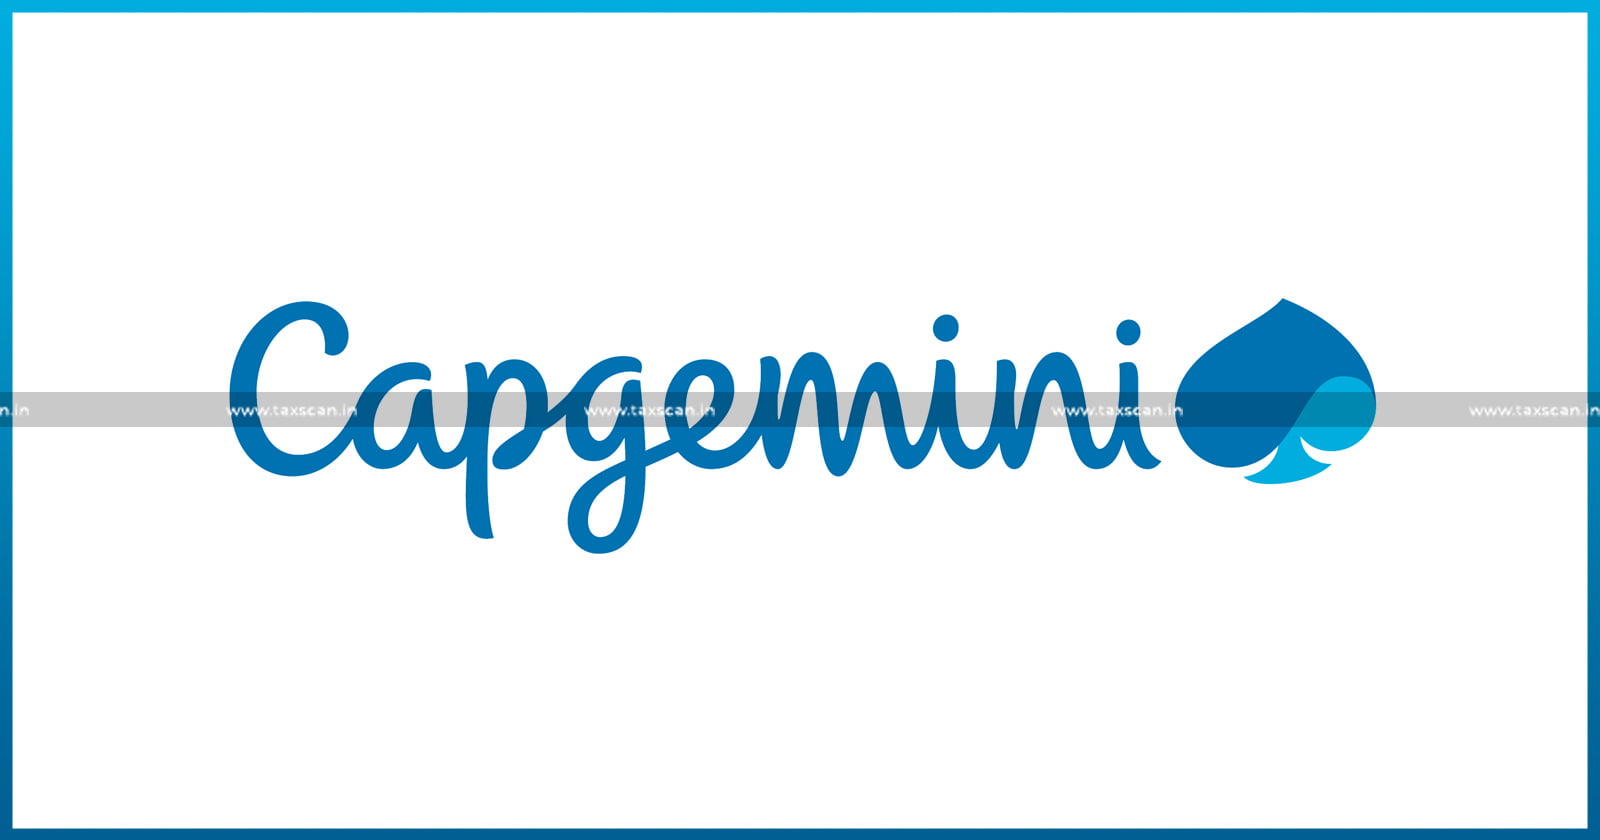 B. Com Vacancy in Capgemini - B. Com - Vacancy - Capgemini - B. Com Vacancy - Vacancy in Capgemini - Jobscan